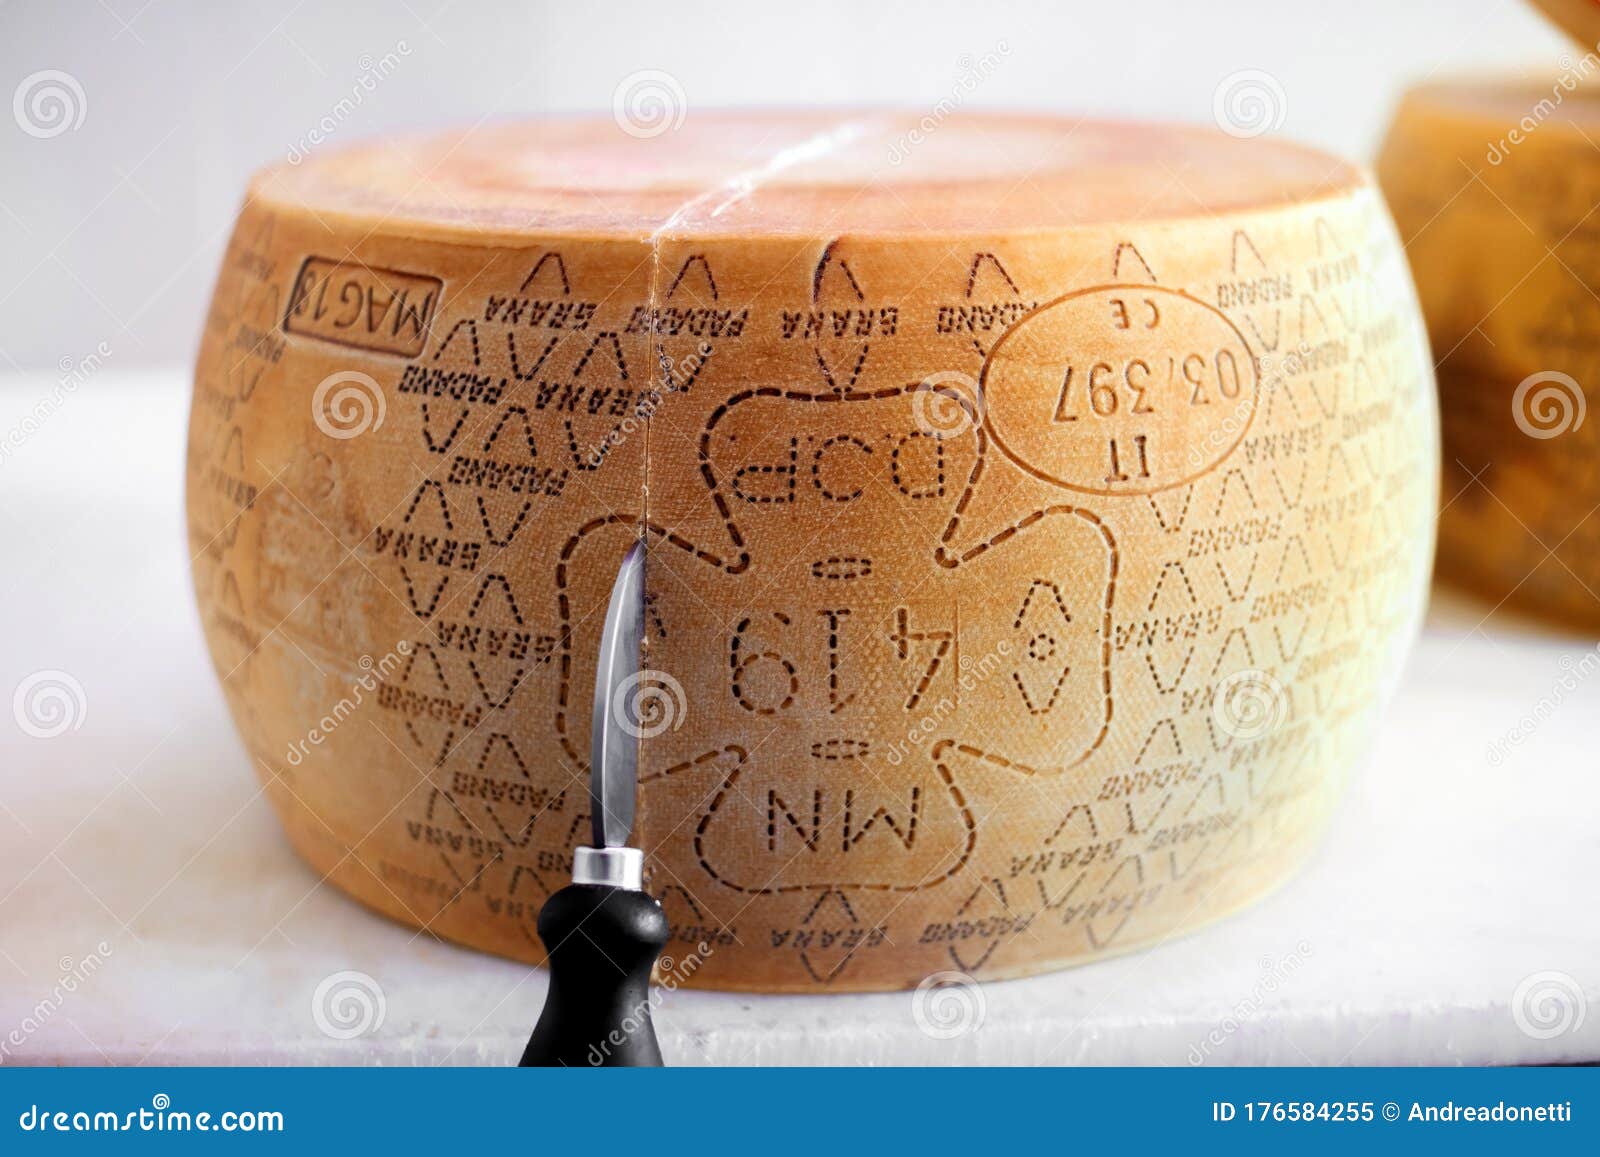 https://thumbs.dreamstime.com/z/slicing-large-wheel-grana-padano-cheese-po-valley-italy-using-blade-close-up-176584255.jpg